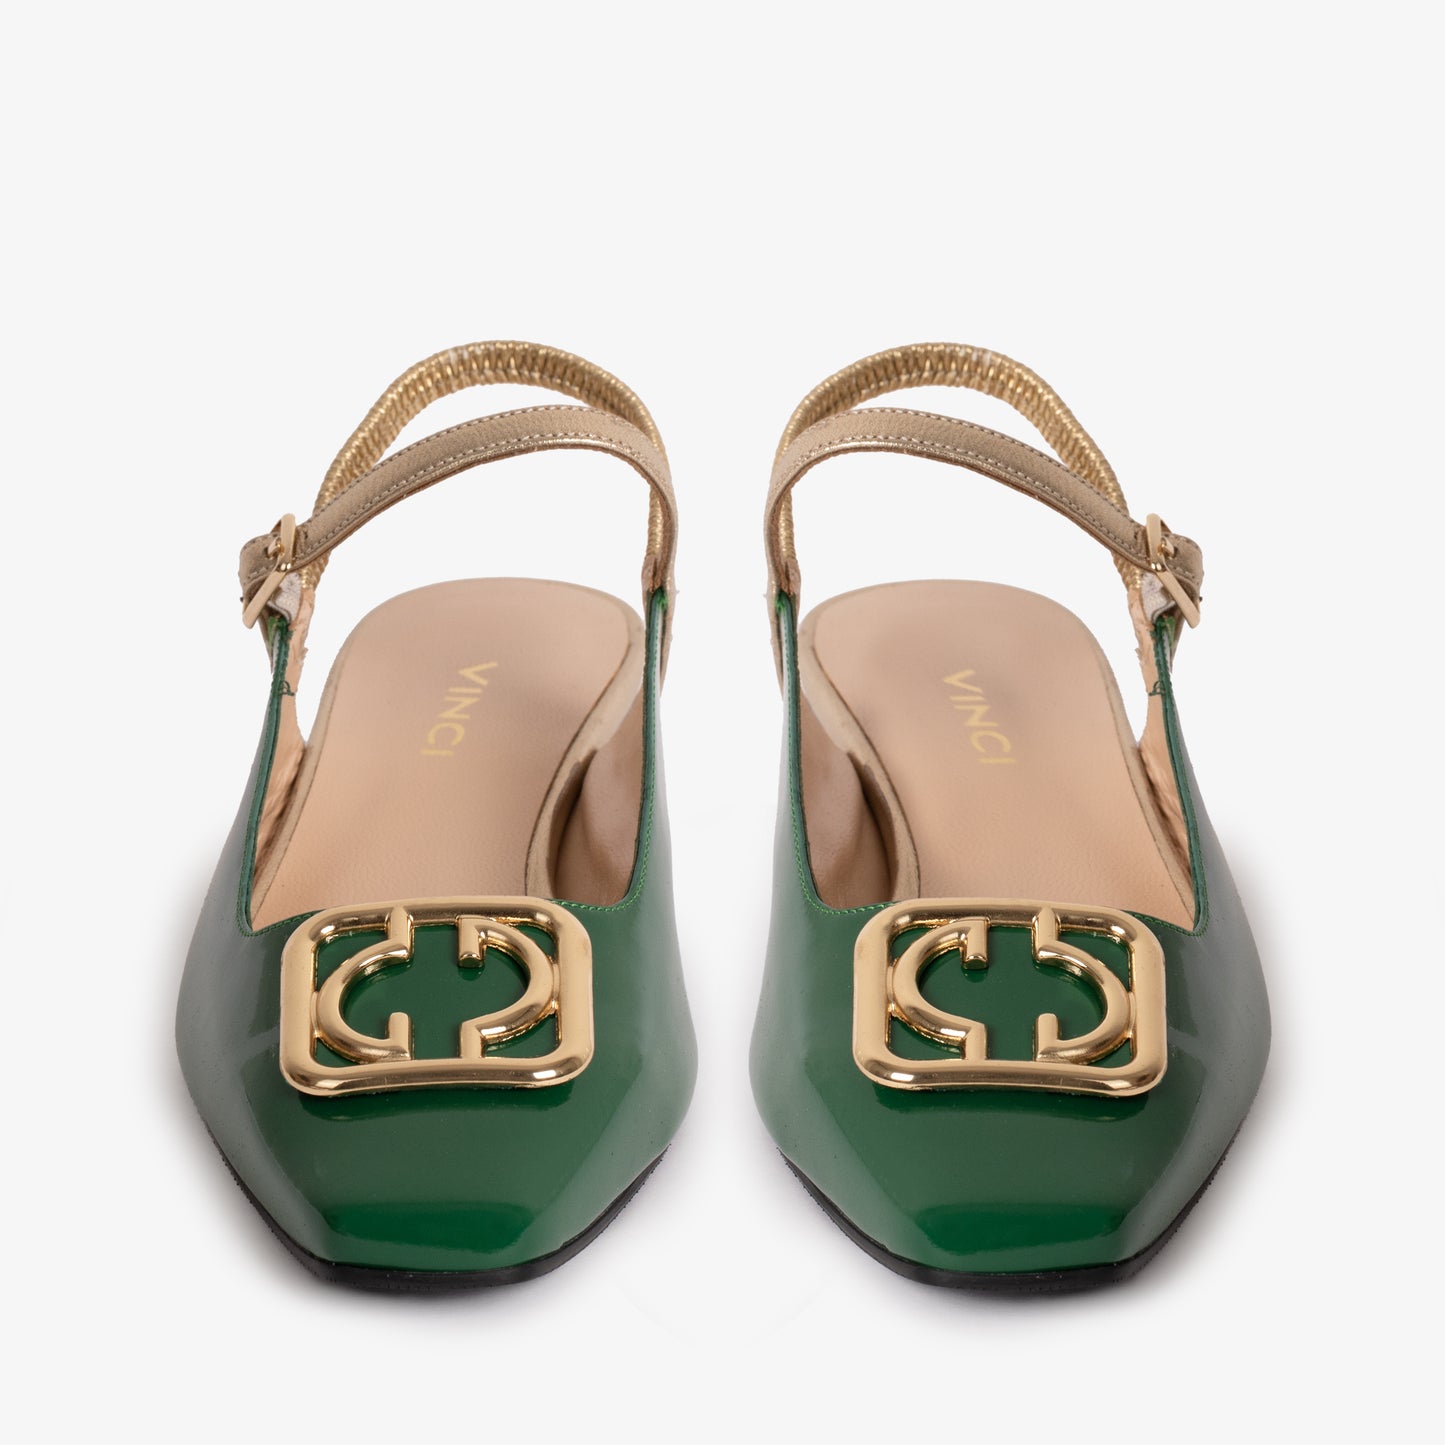 The Rosalinda Green Patent Leather Women Flat Slingback Shoe